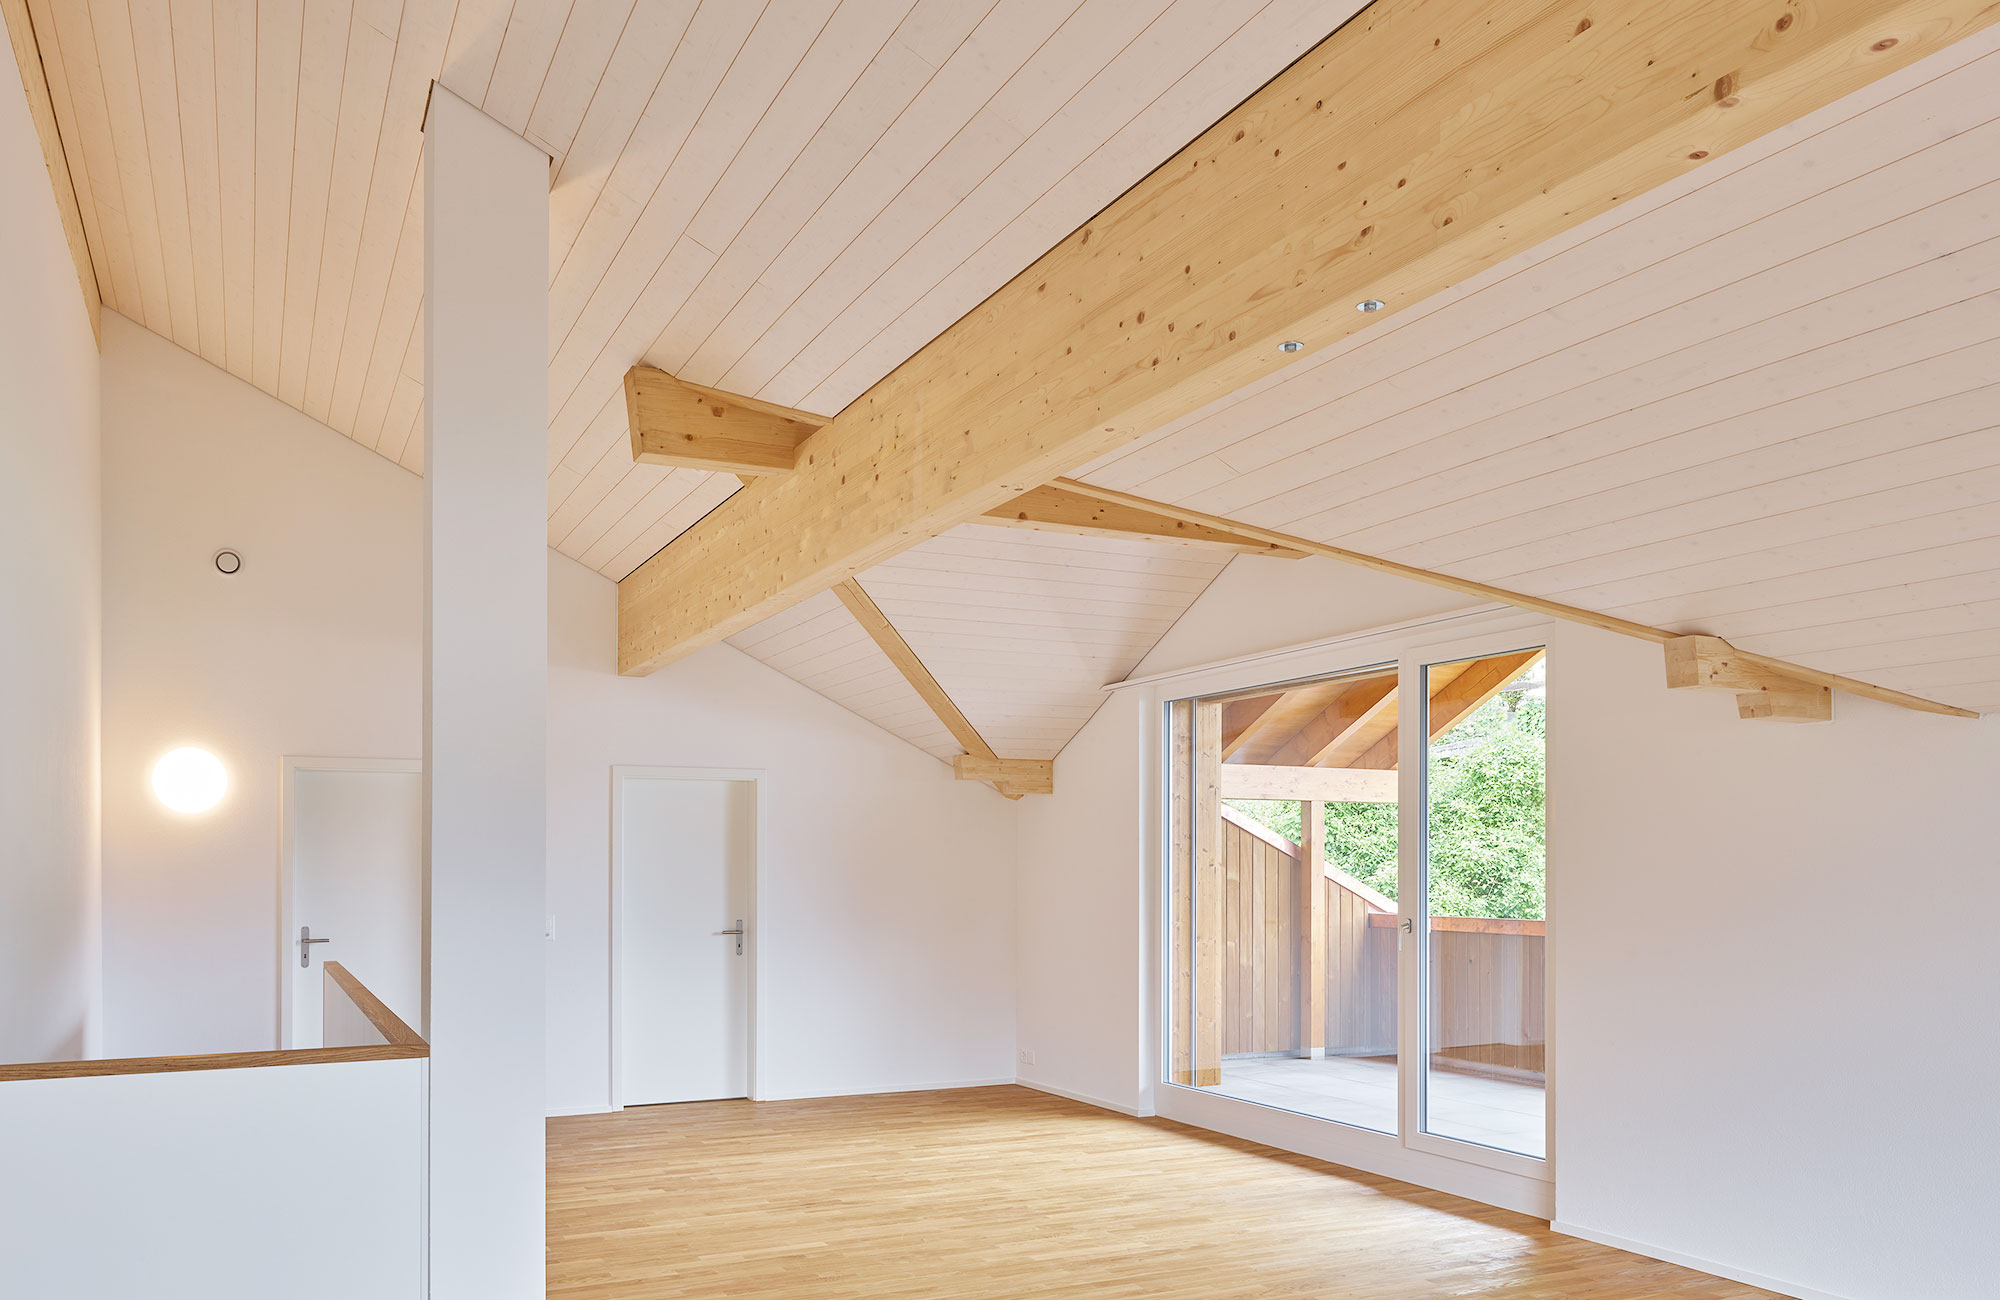 Dachgeschoss in Mehrfamilienhaus in Holzbau